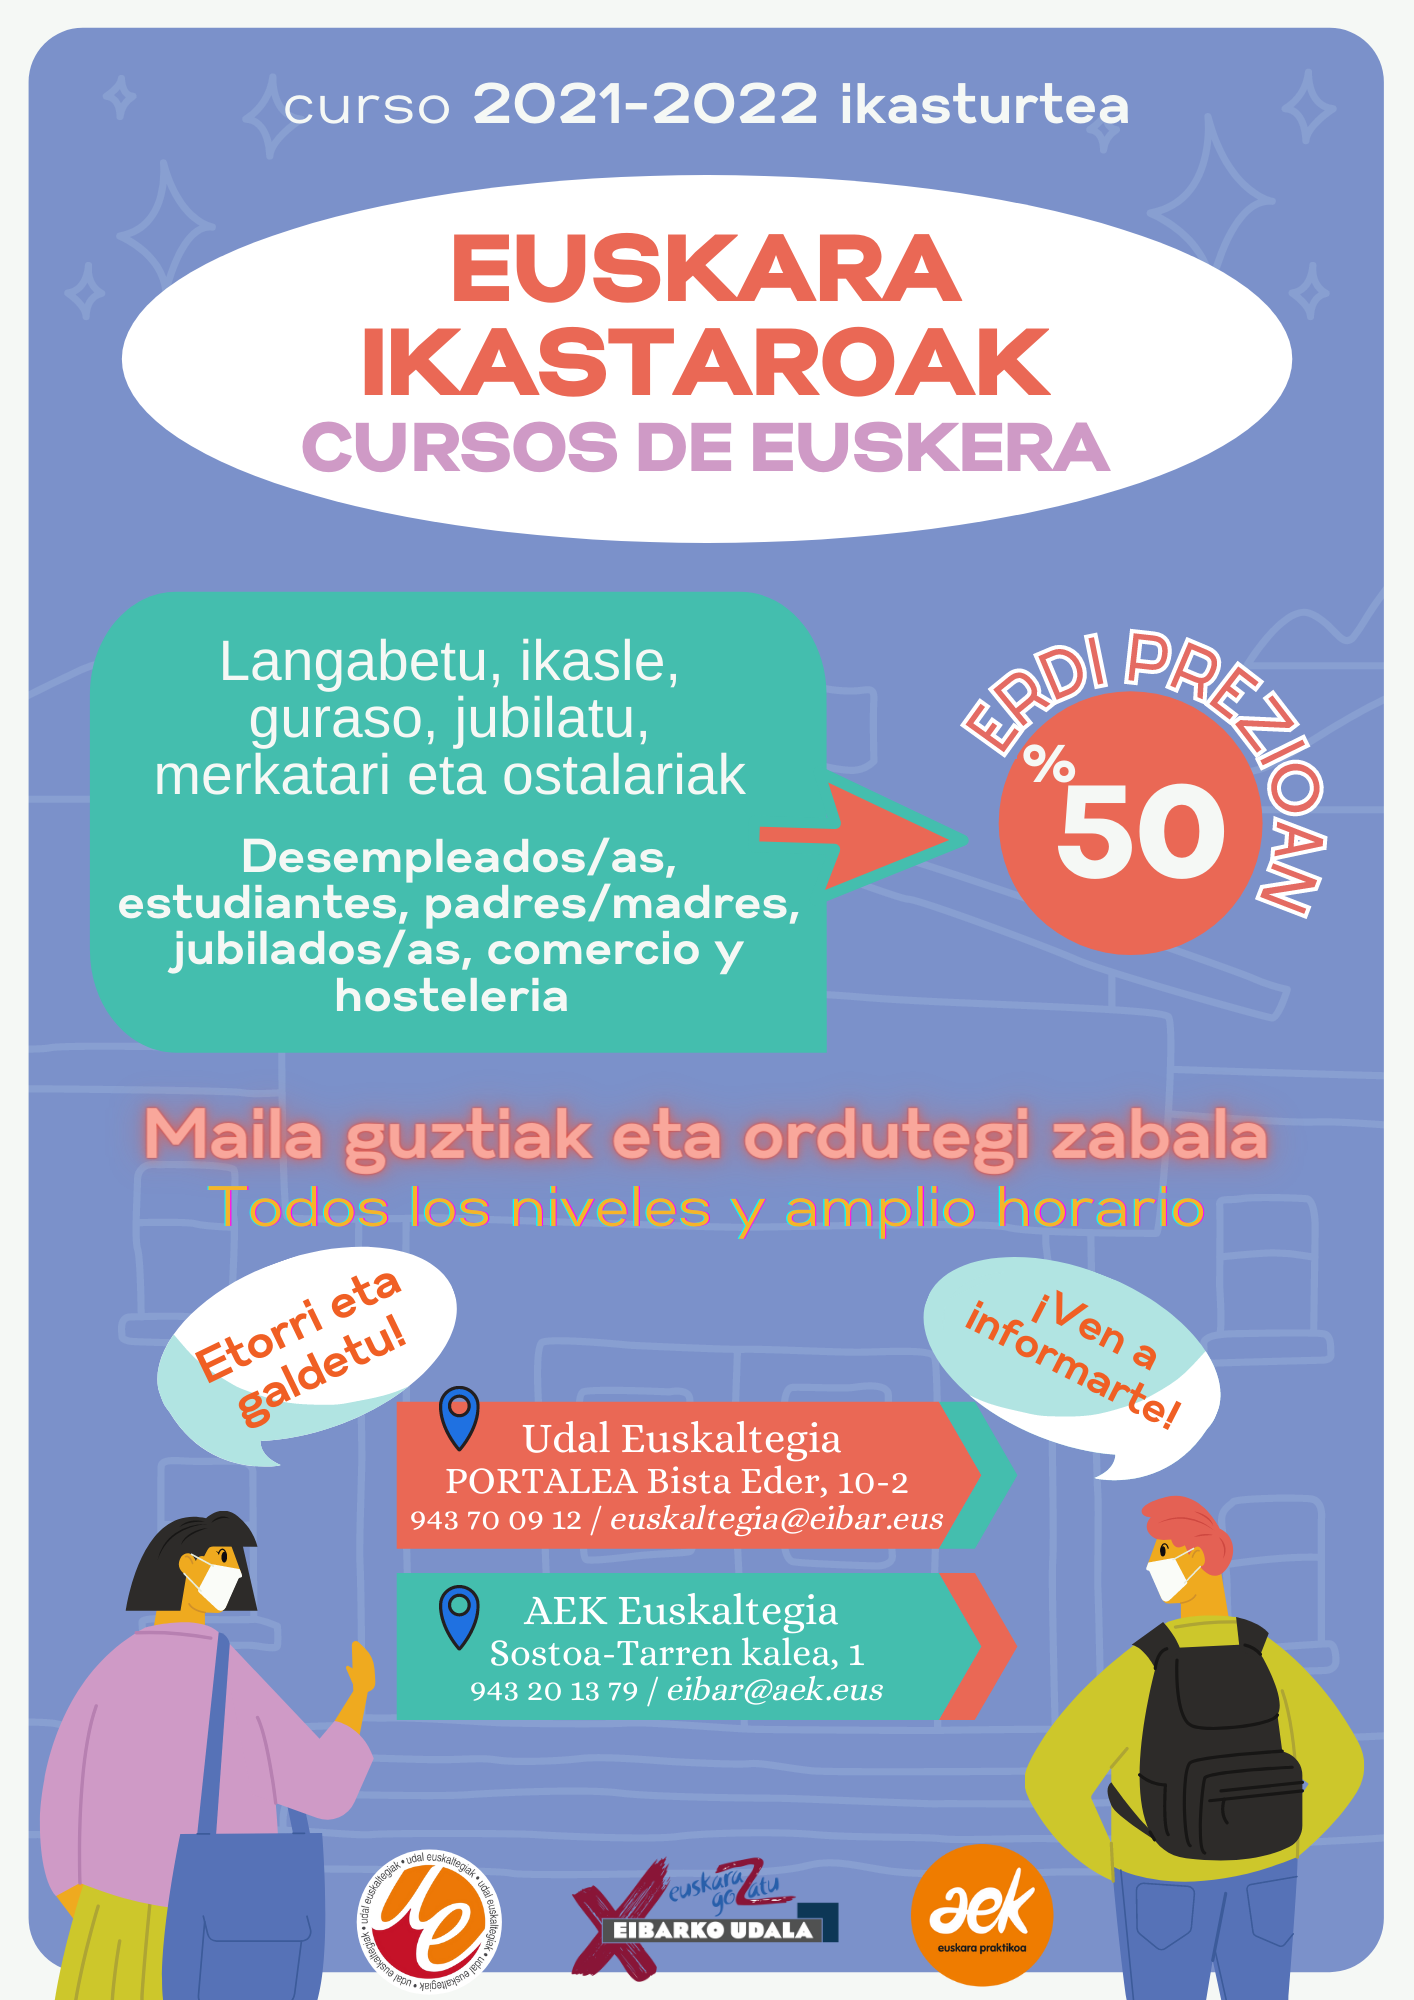 Campaña especial de euskaldunización en el Euskaltegi Municipal y AEK de Eibar